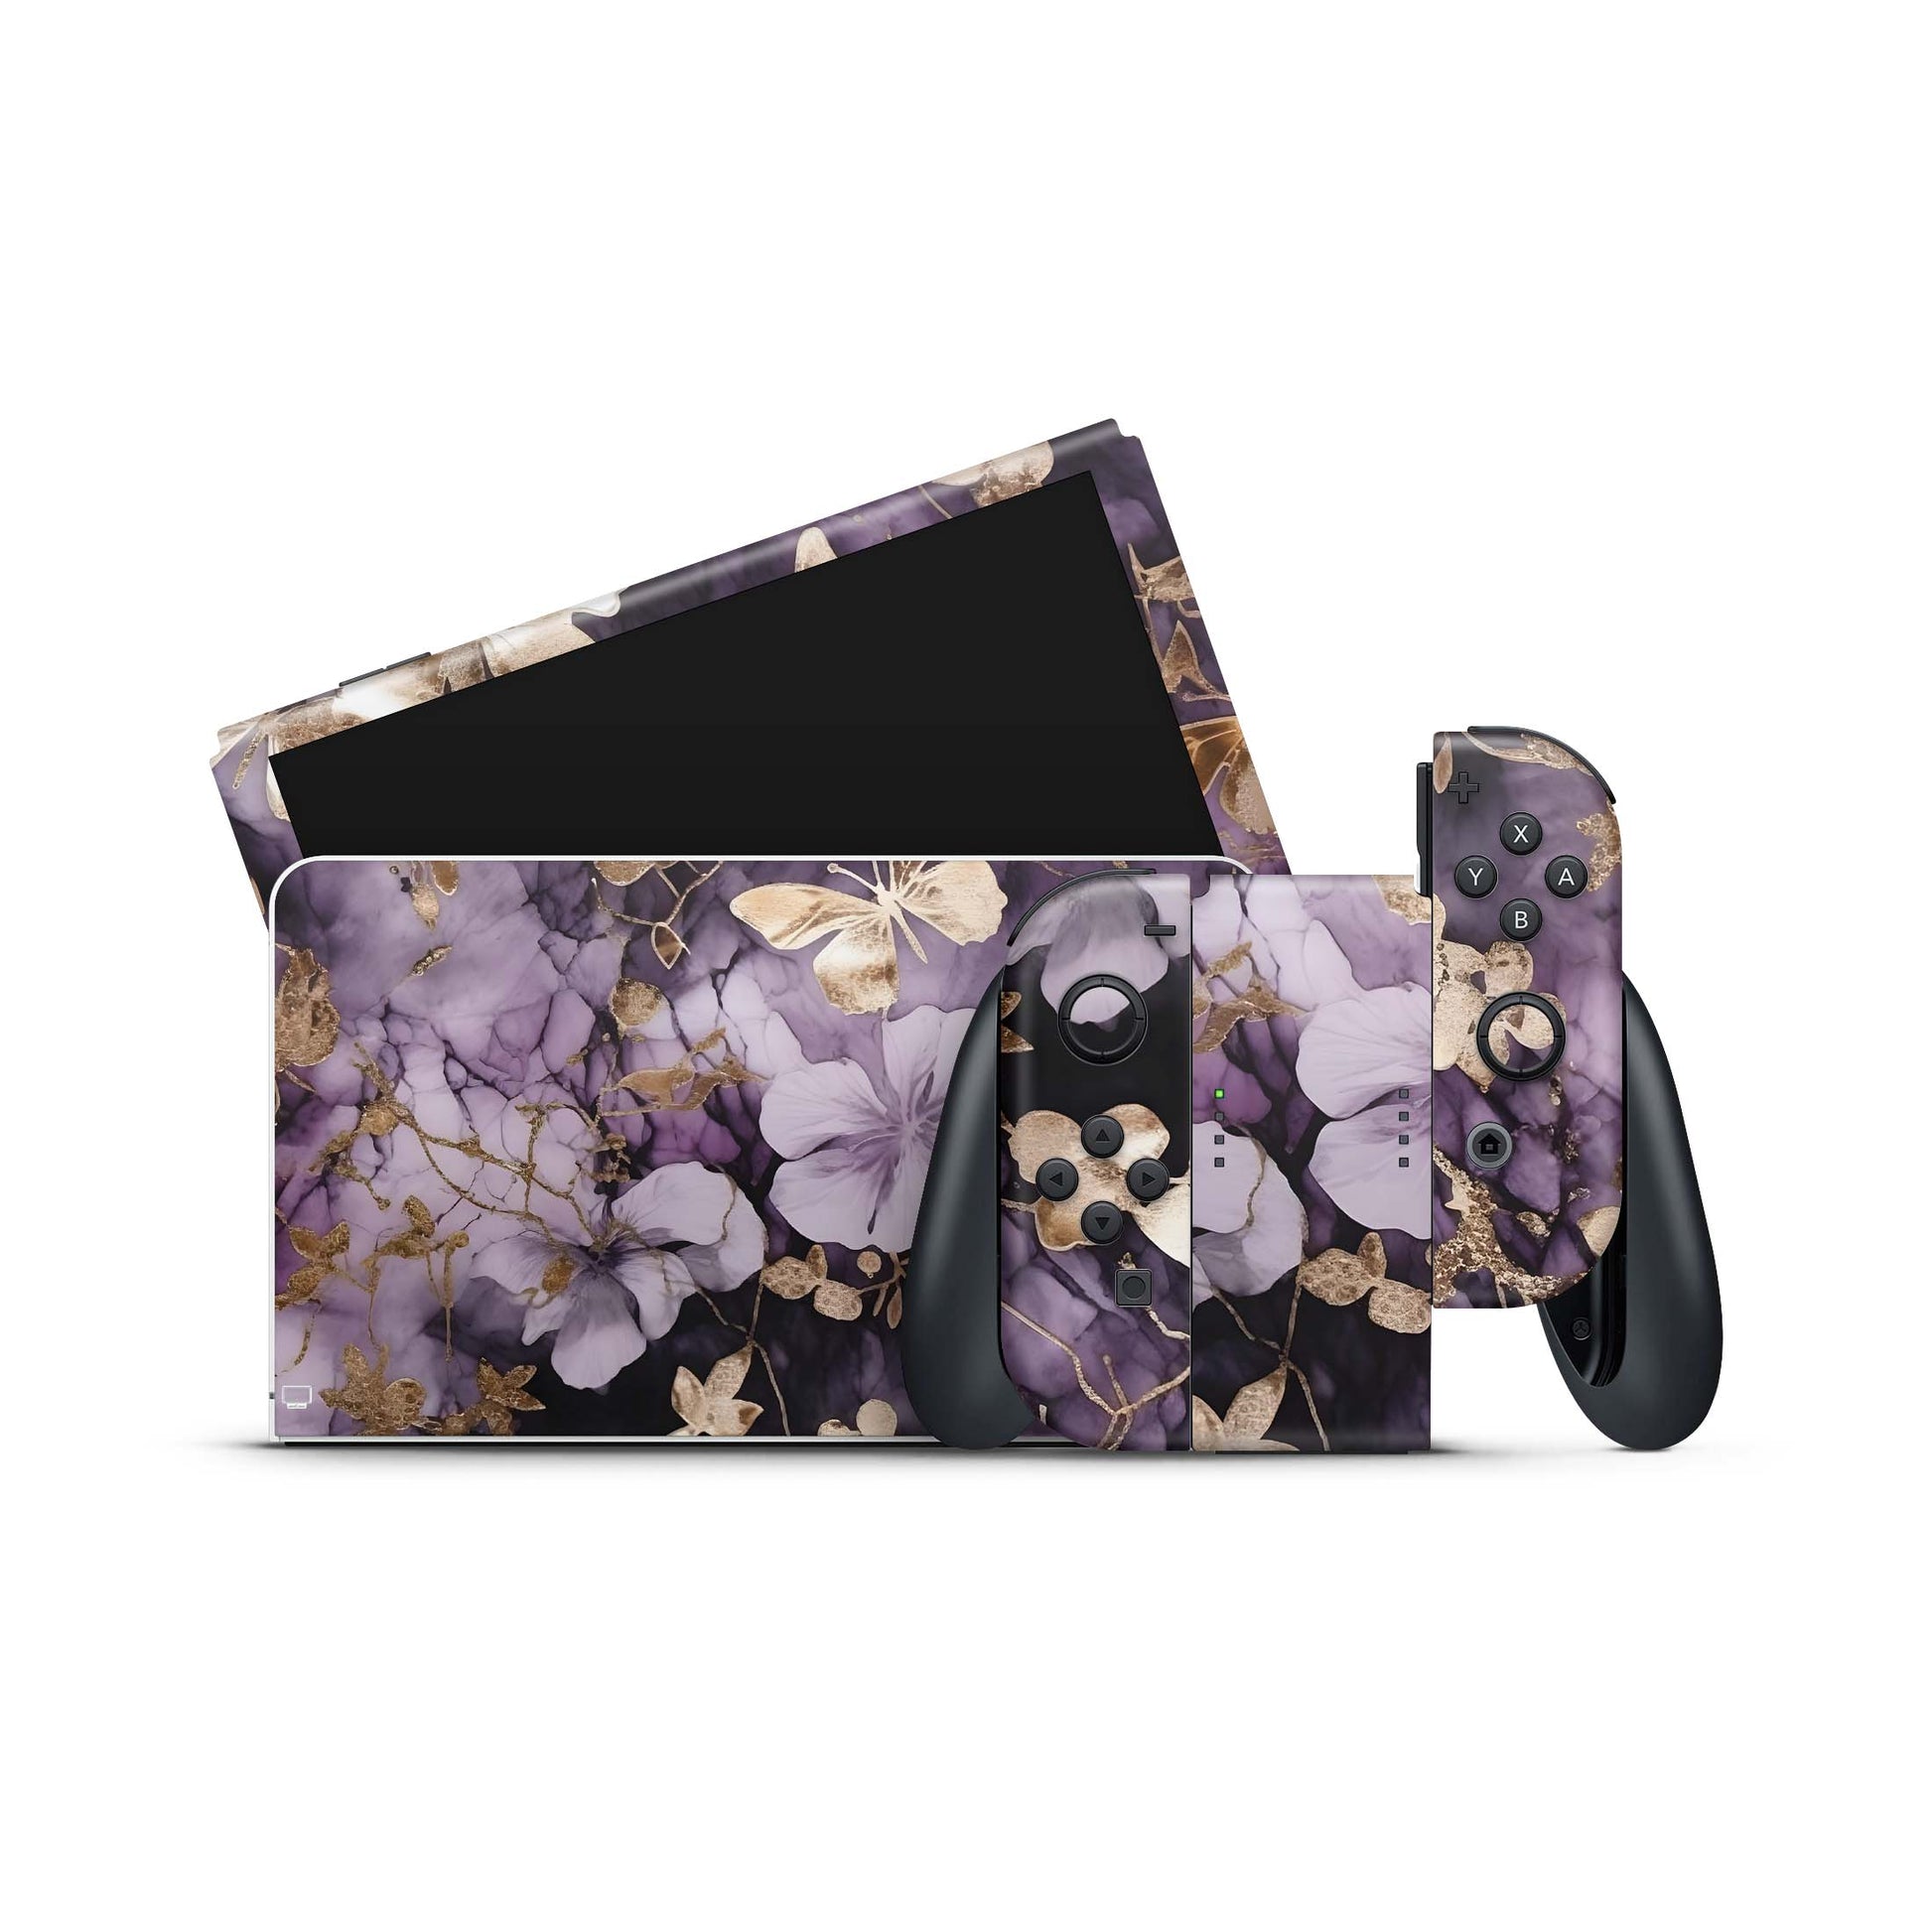 Nintendo Switch Skin Wrap Aufkleber Vinyl Skins Folie Design Flowers and Butterfly Aufkleber Skins4u   